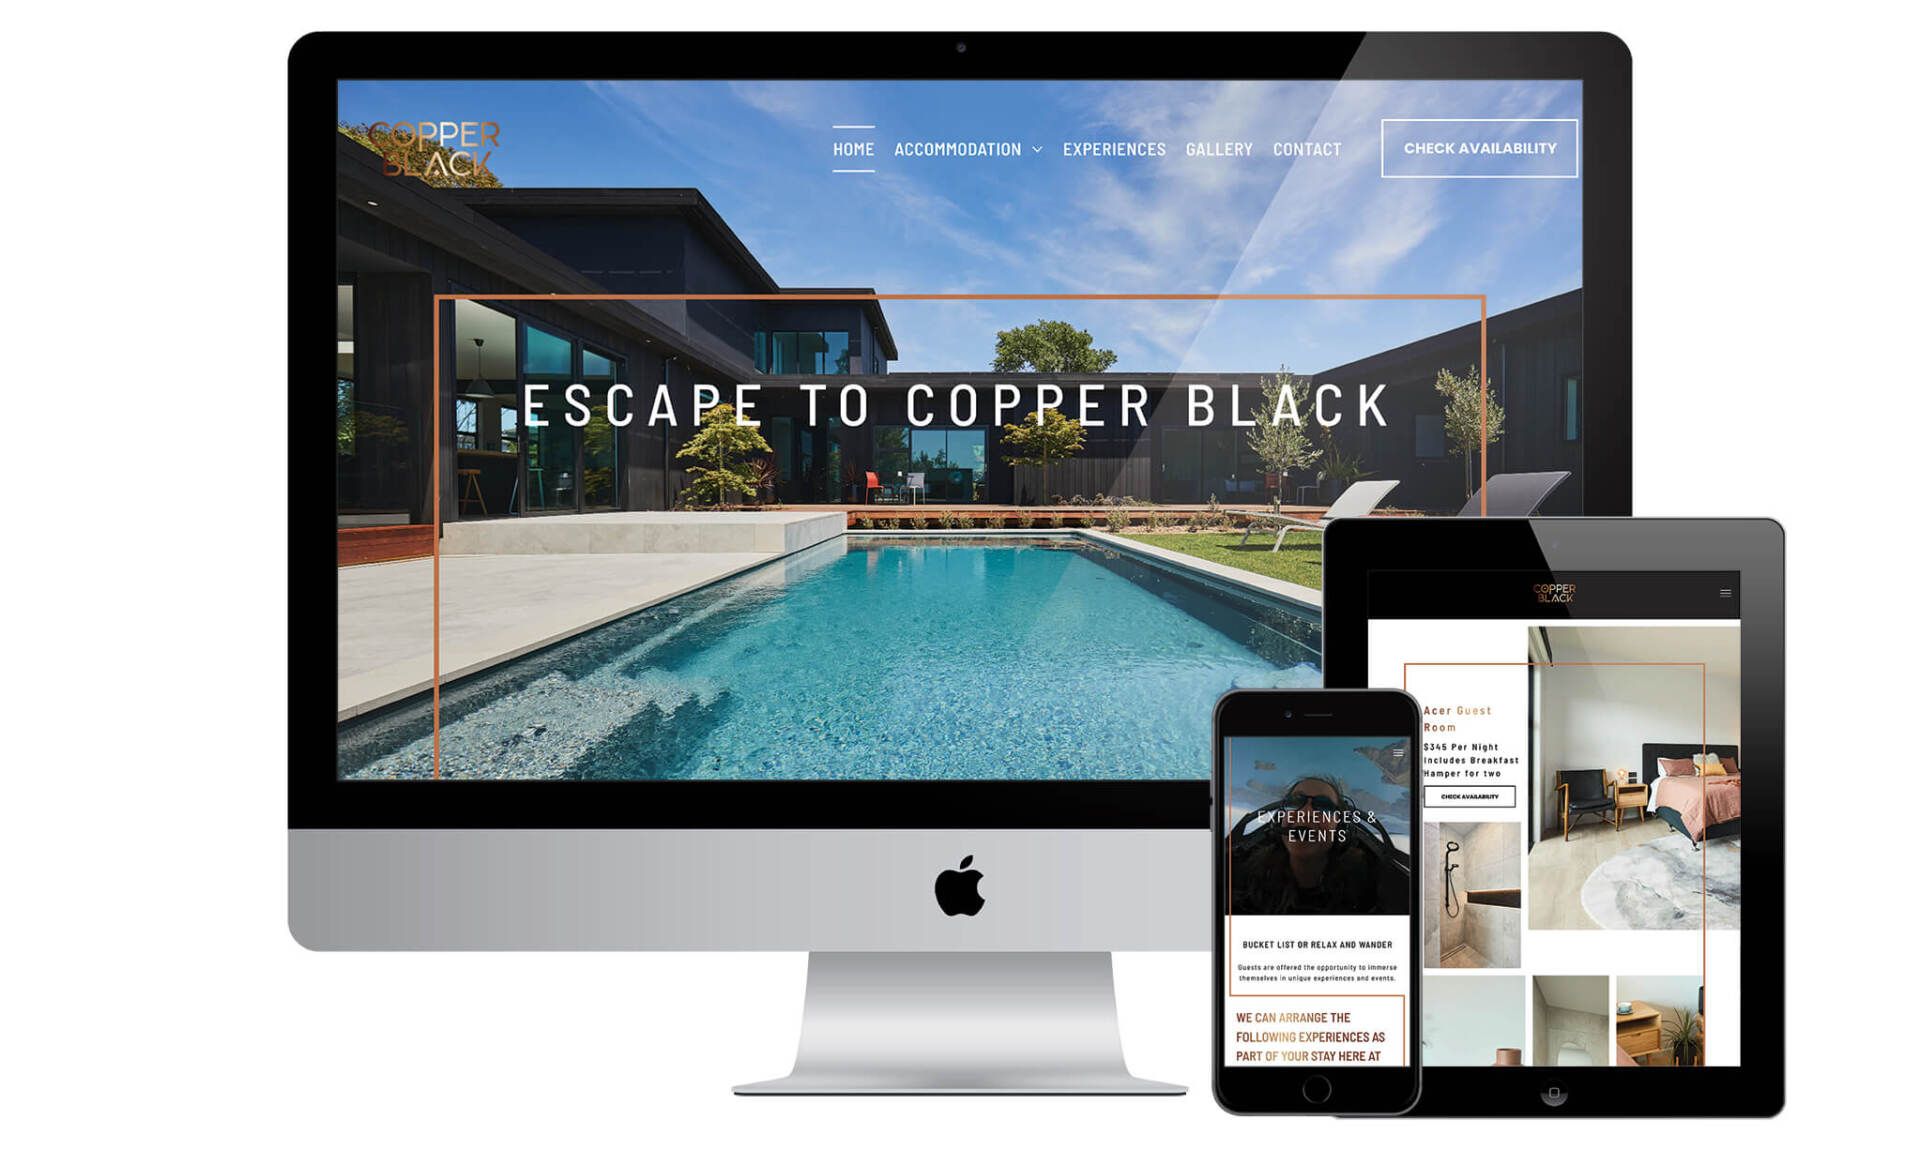 Copper Black website designed by Vanilla Hayes creative graphic design  studio in Blenheim, Marlborough, New Zealand